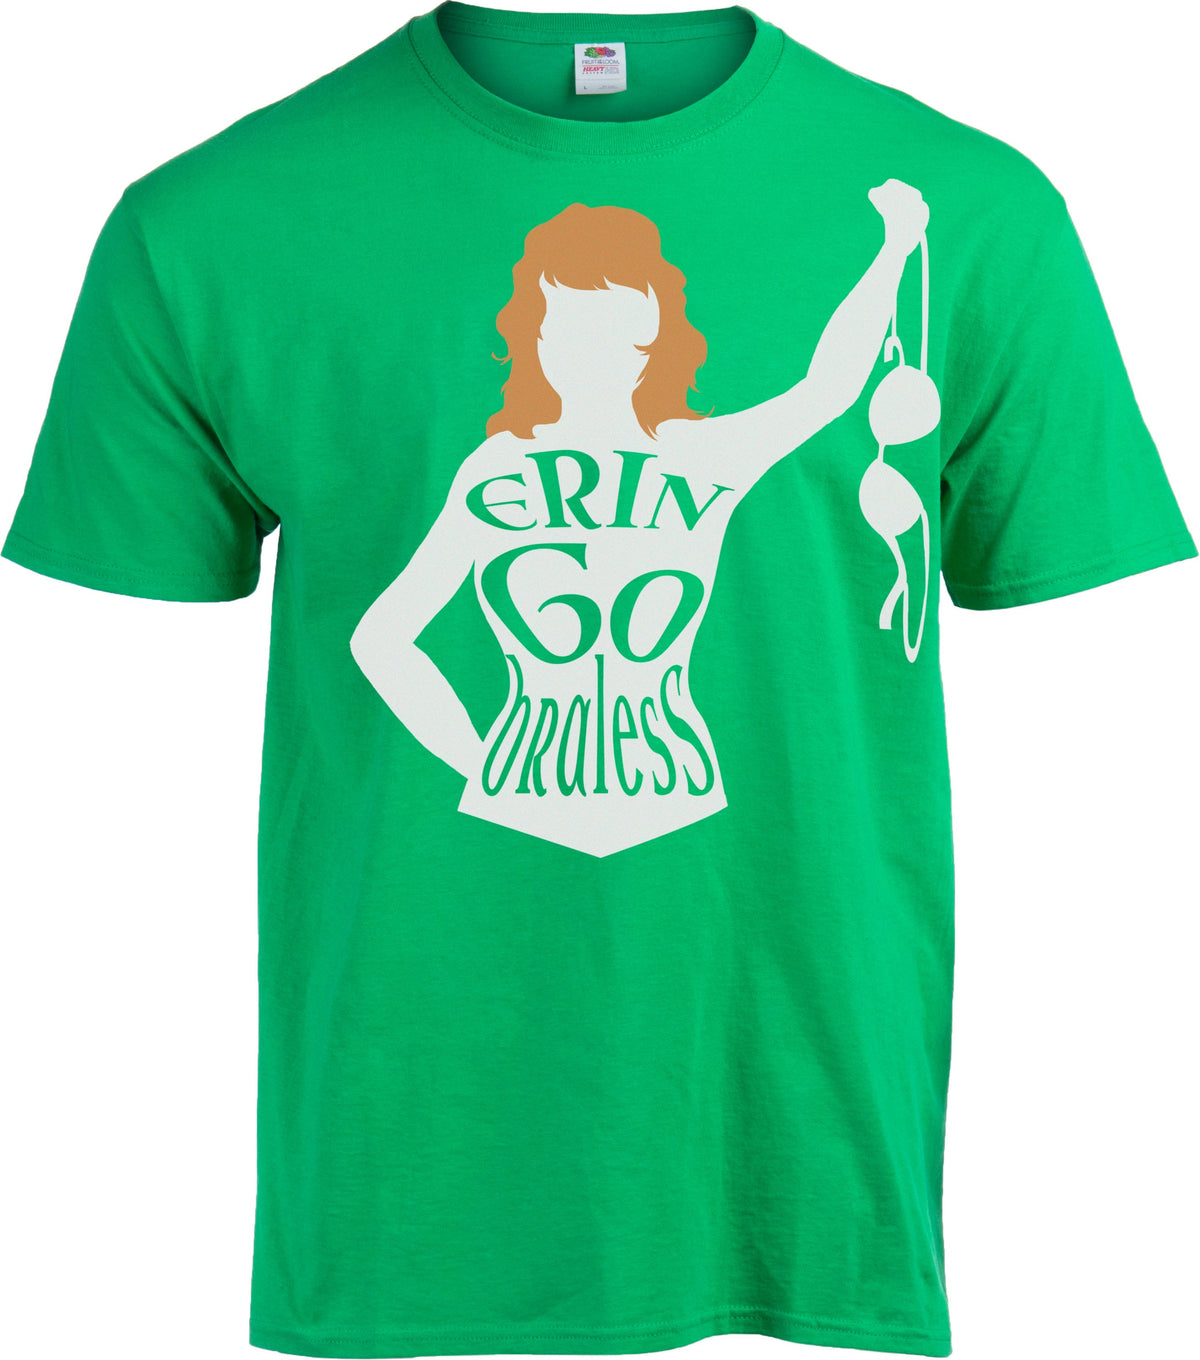 Erin Go Braless - Funny St. Patrick's Day Raunchy Humor Pub T-shirt - Women's